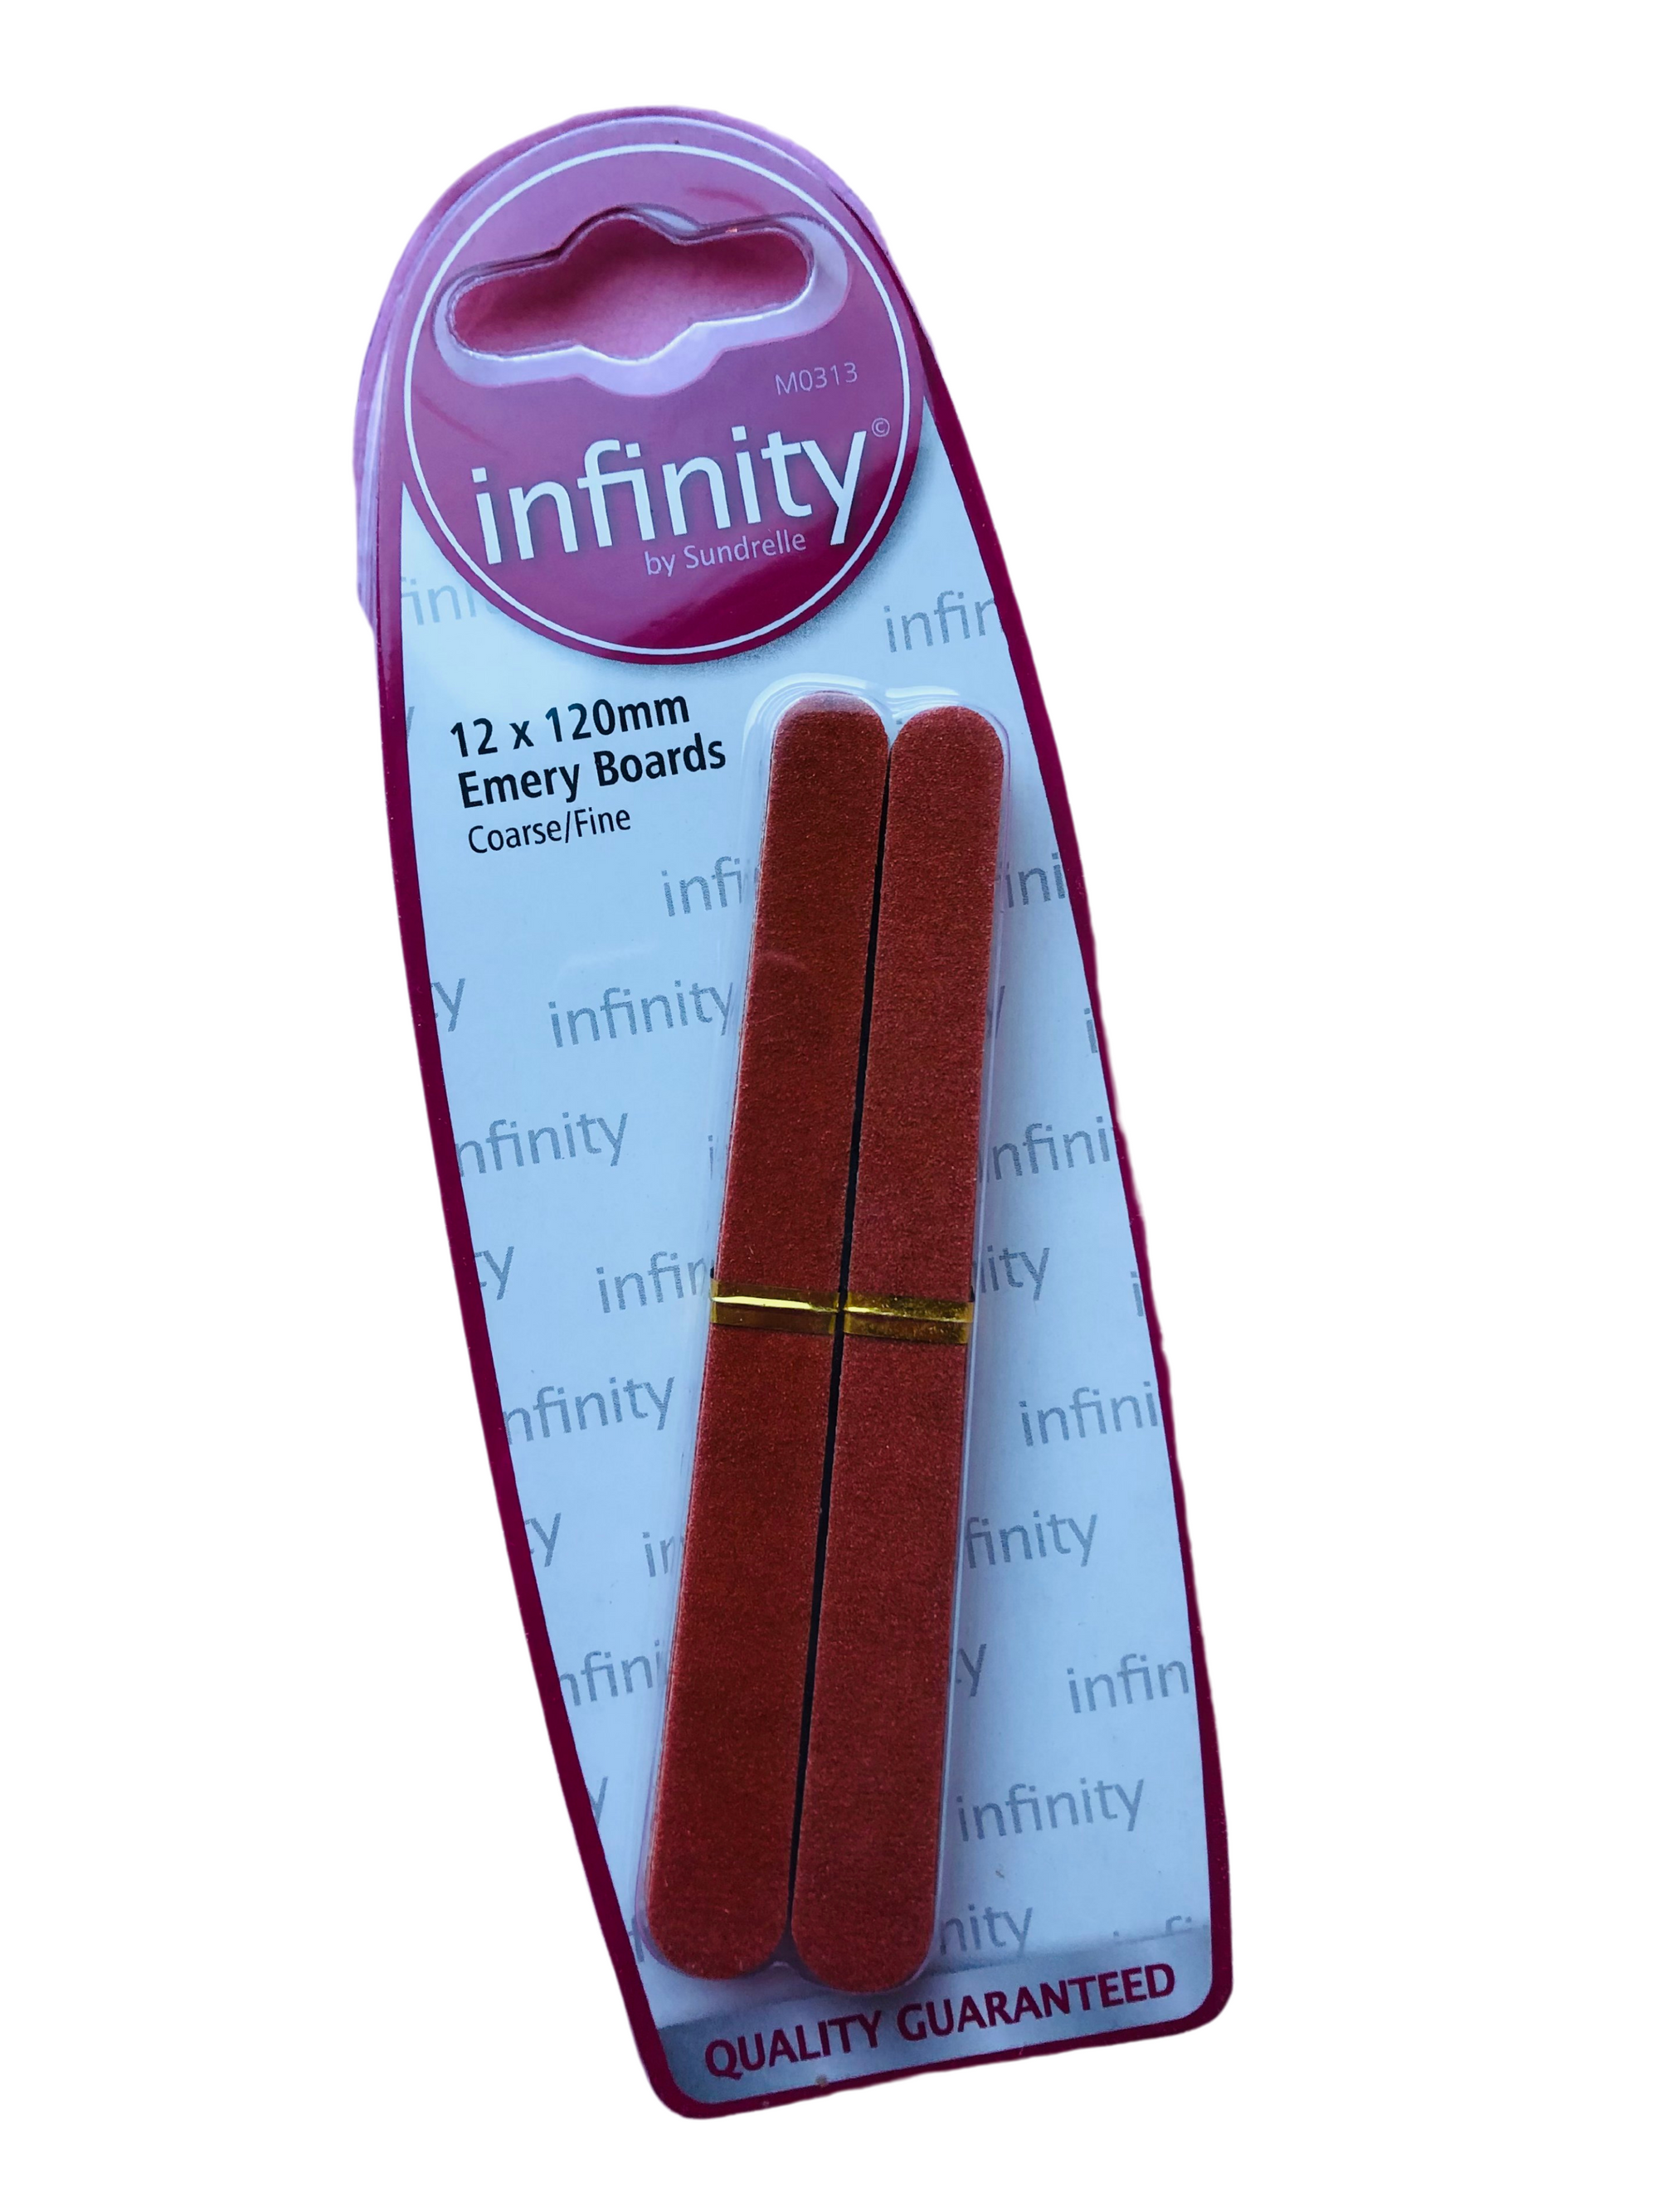 Infinity emery board 12x120mm, Leahys pharmacy